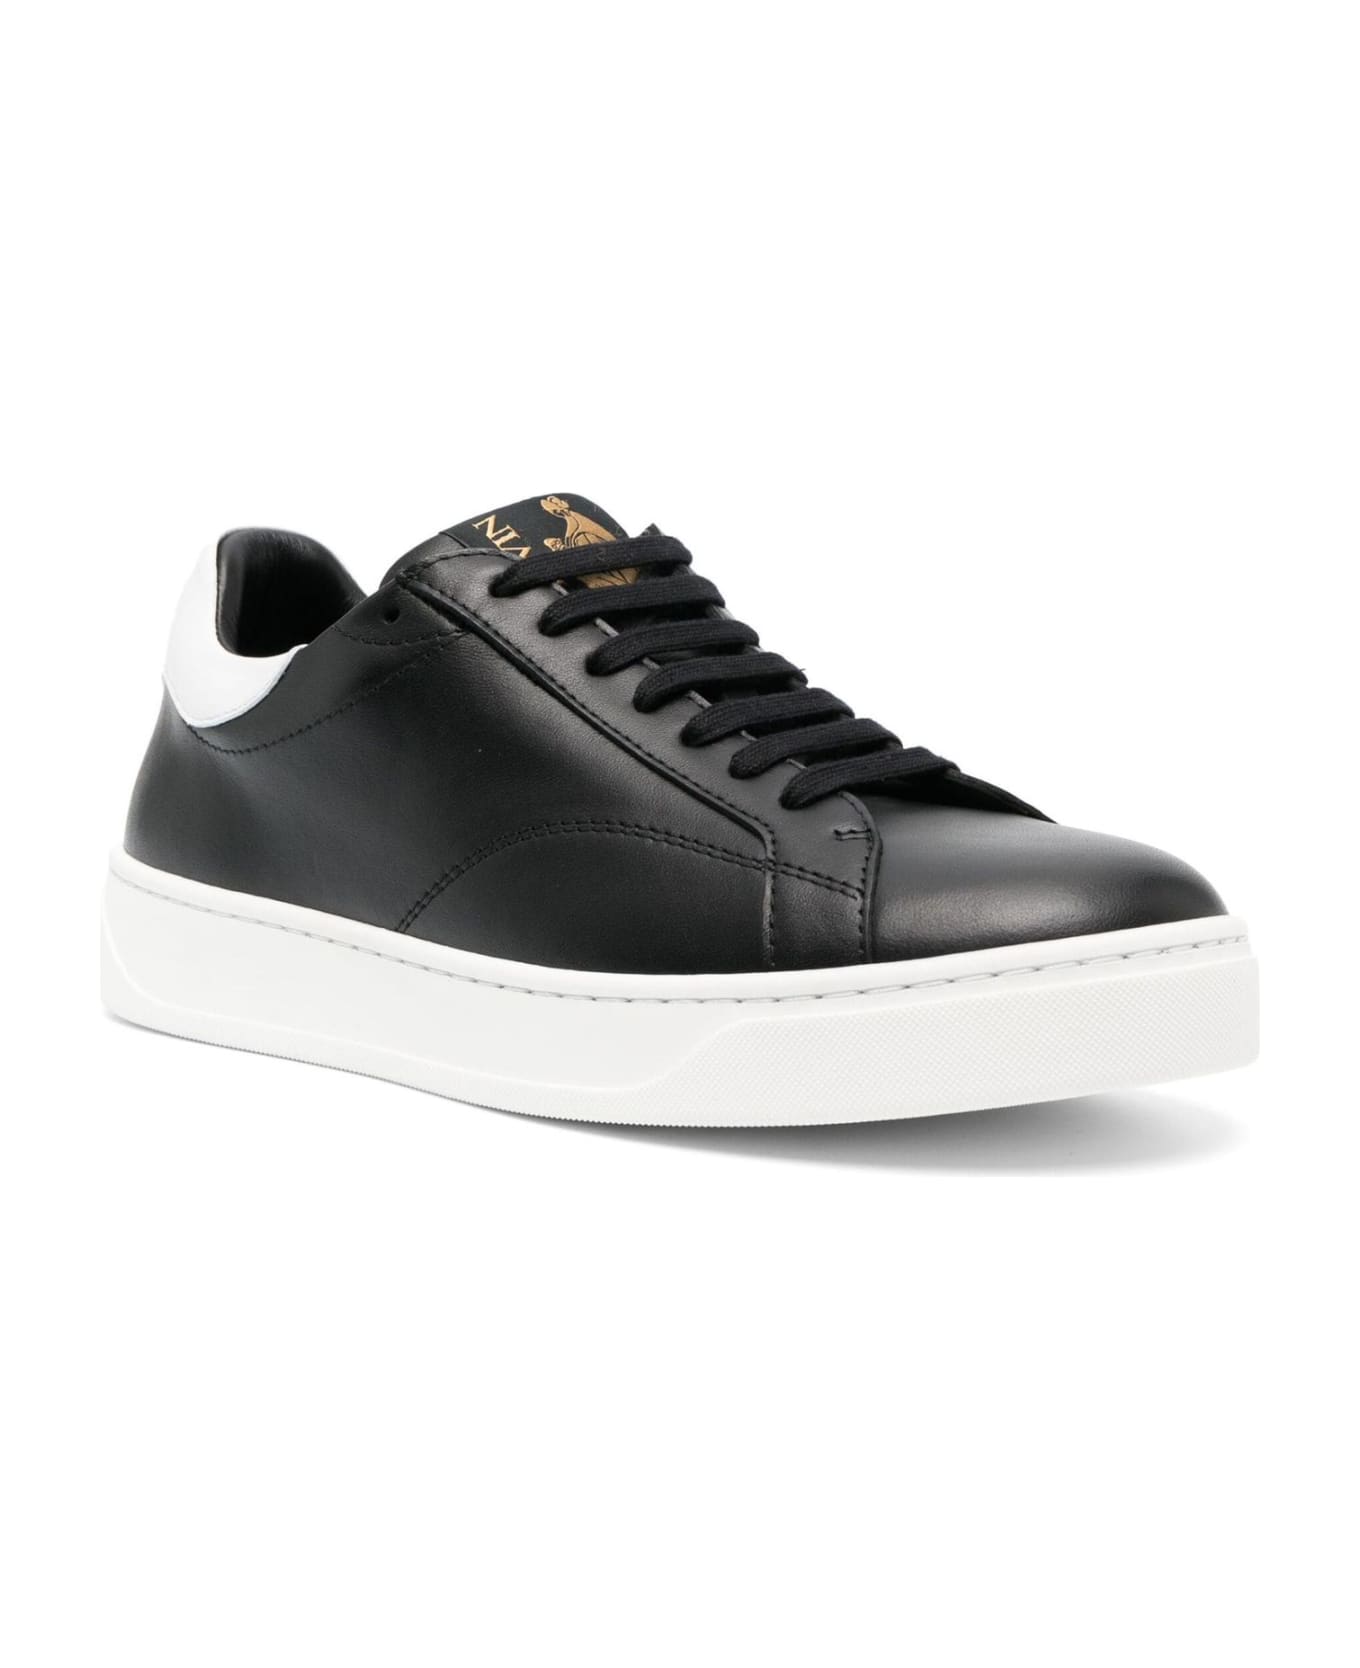 Lanvin Sneakers Black - Black